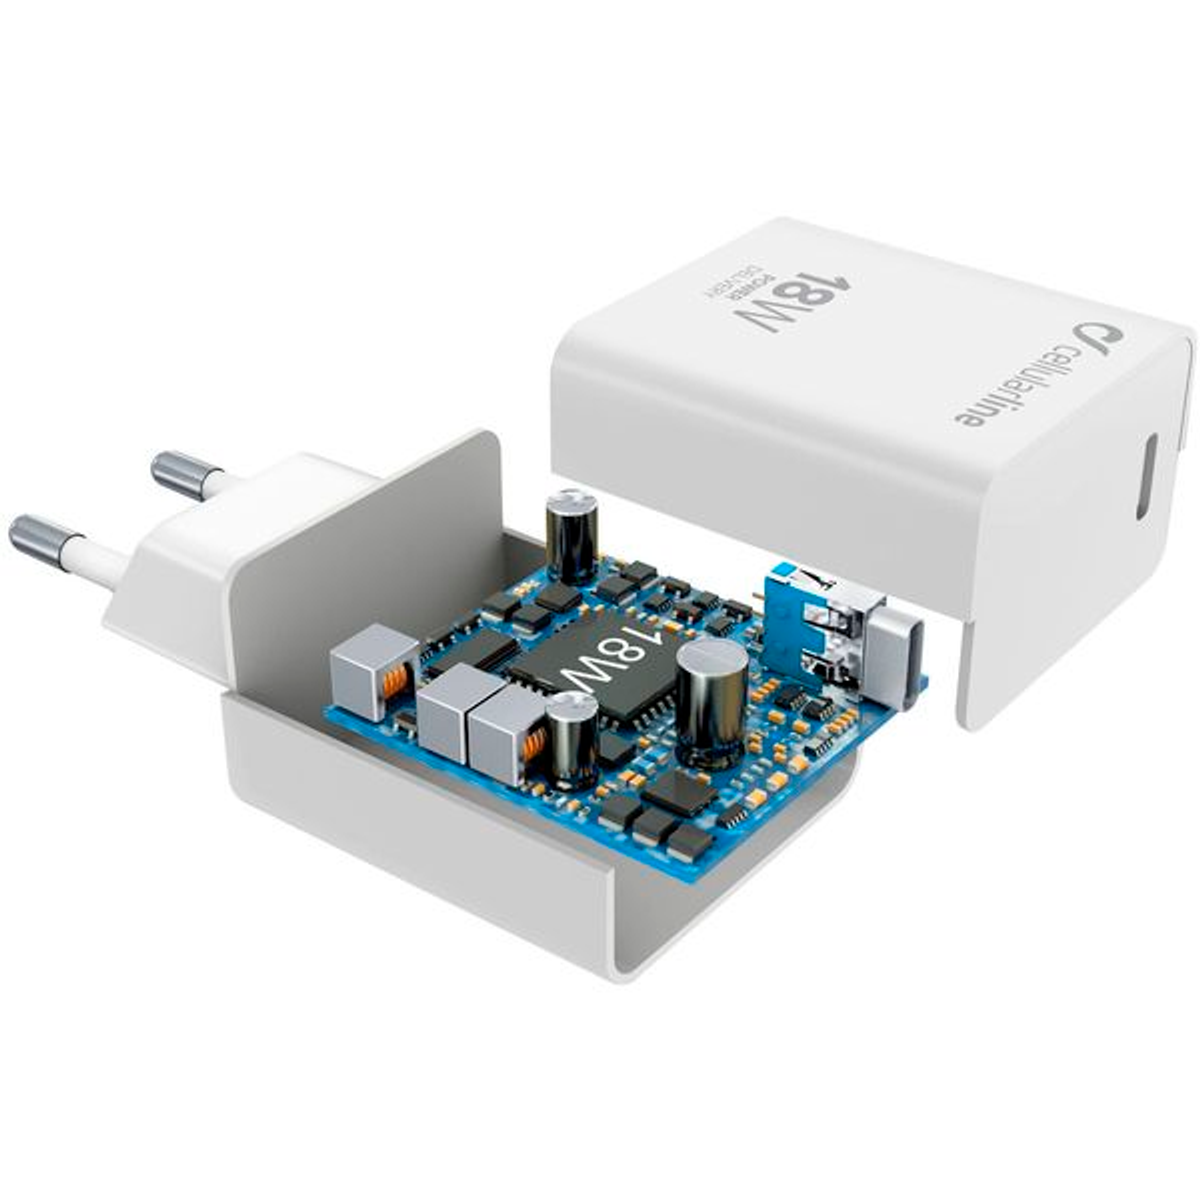 CELLULAR Ladegerät Weiß USB-C LINE CHARGERPD 60759 Apple, ACHIPHKIT